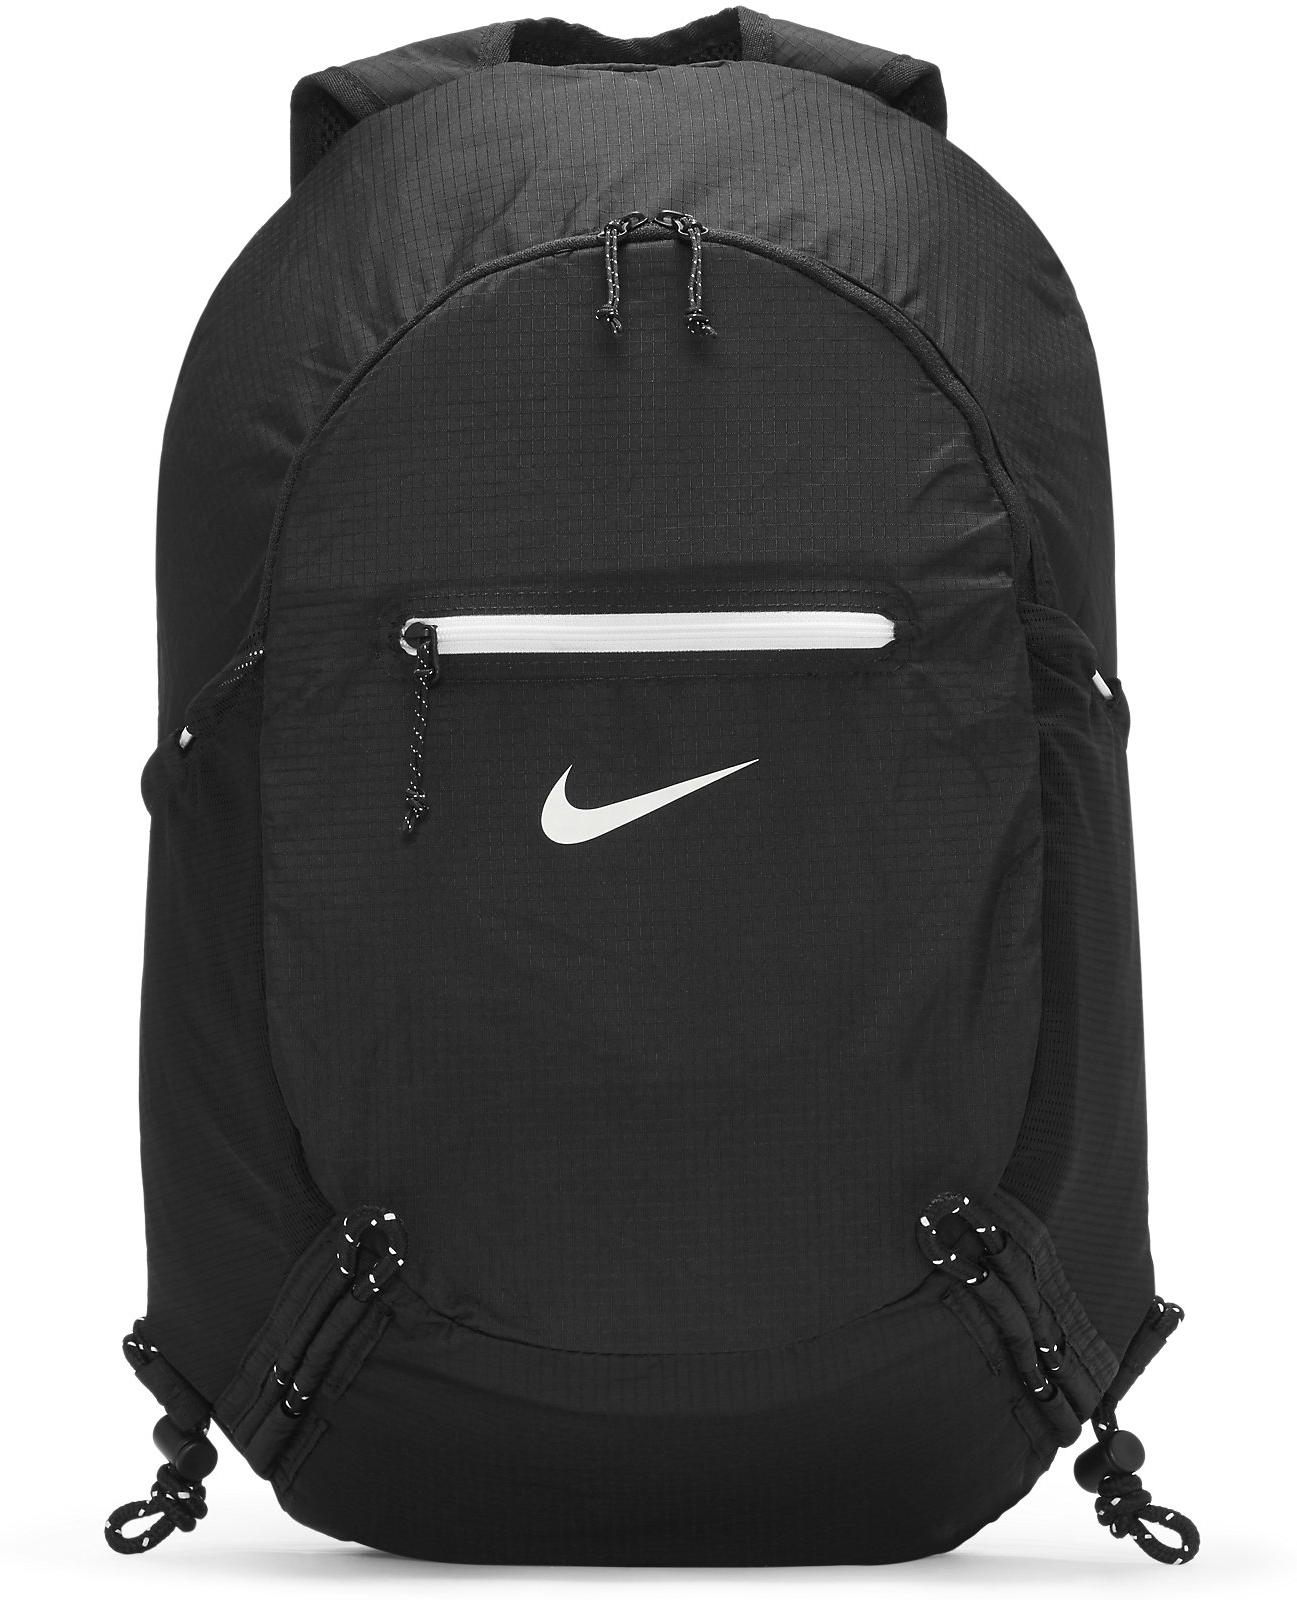 Lehký a skládací batoh Nike Stash